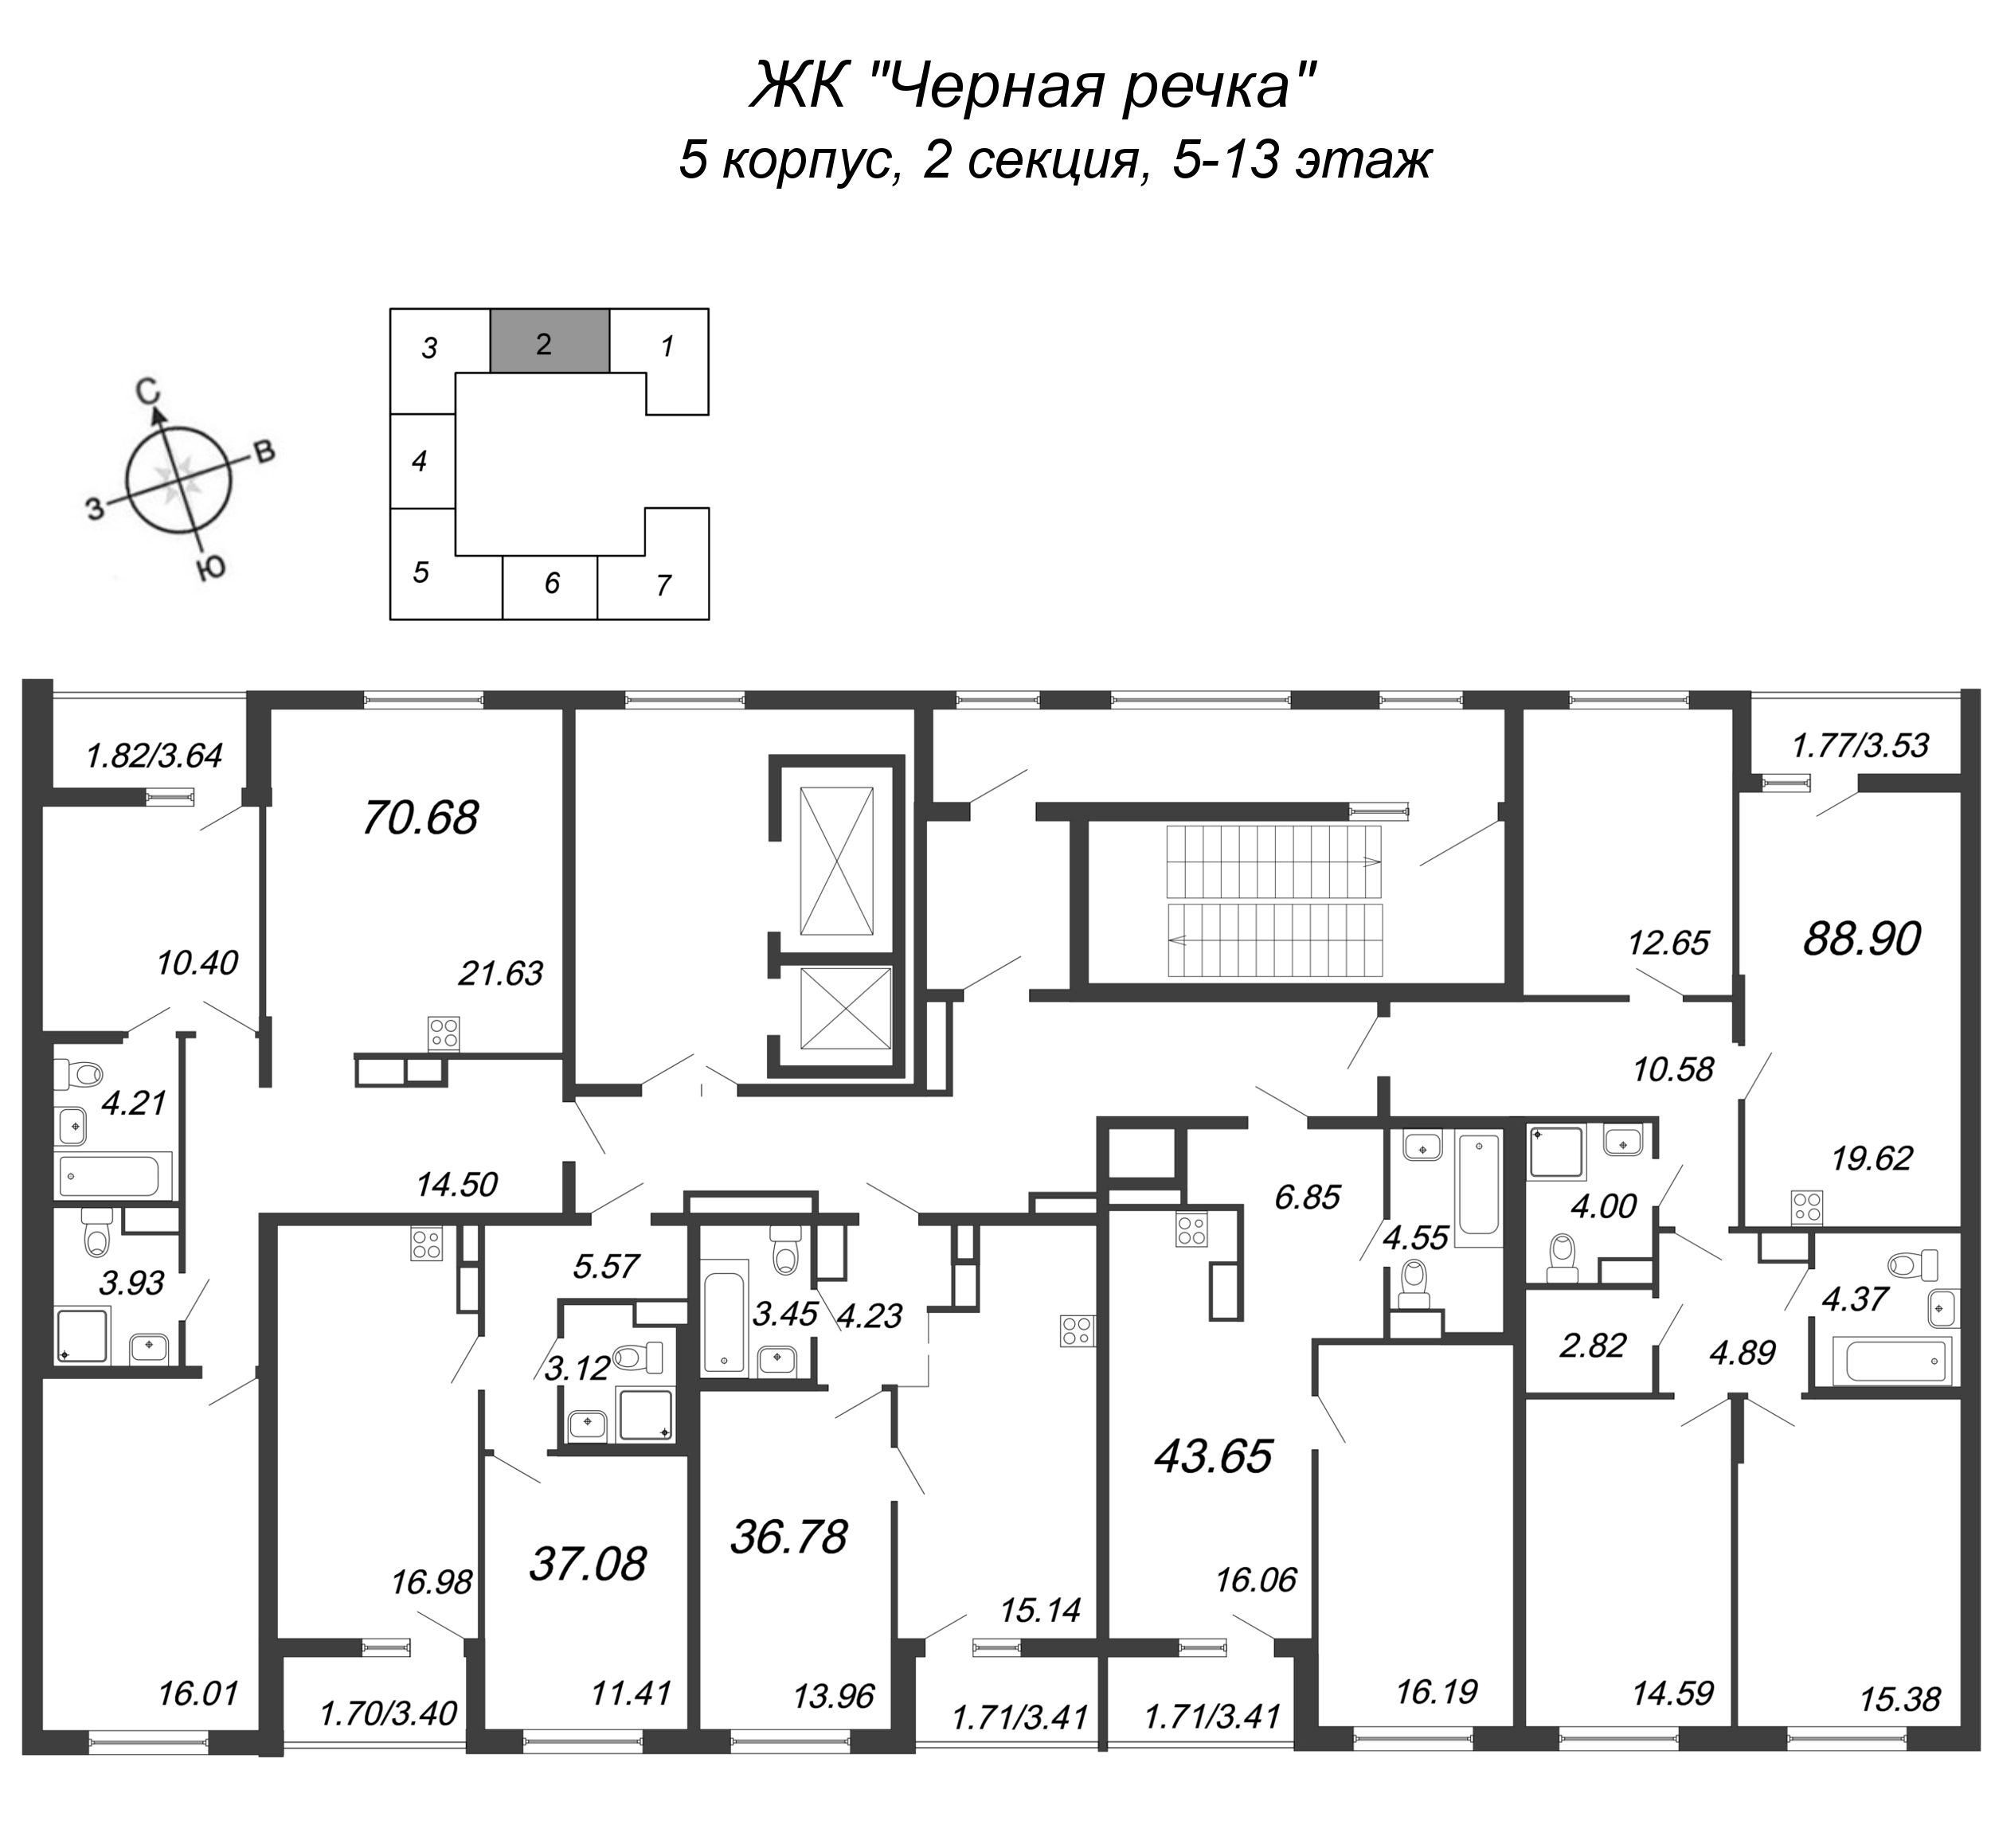 2-комнатная (Евро) квартира, 34.2 м² - планировка этажа